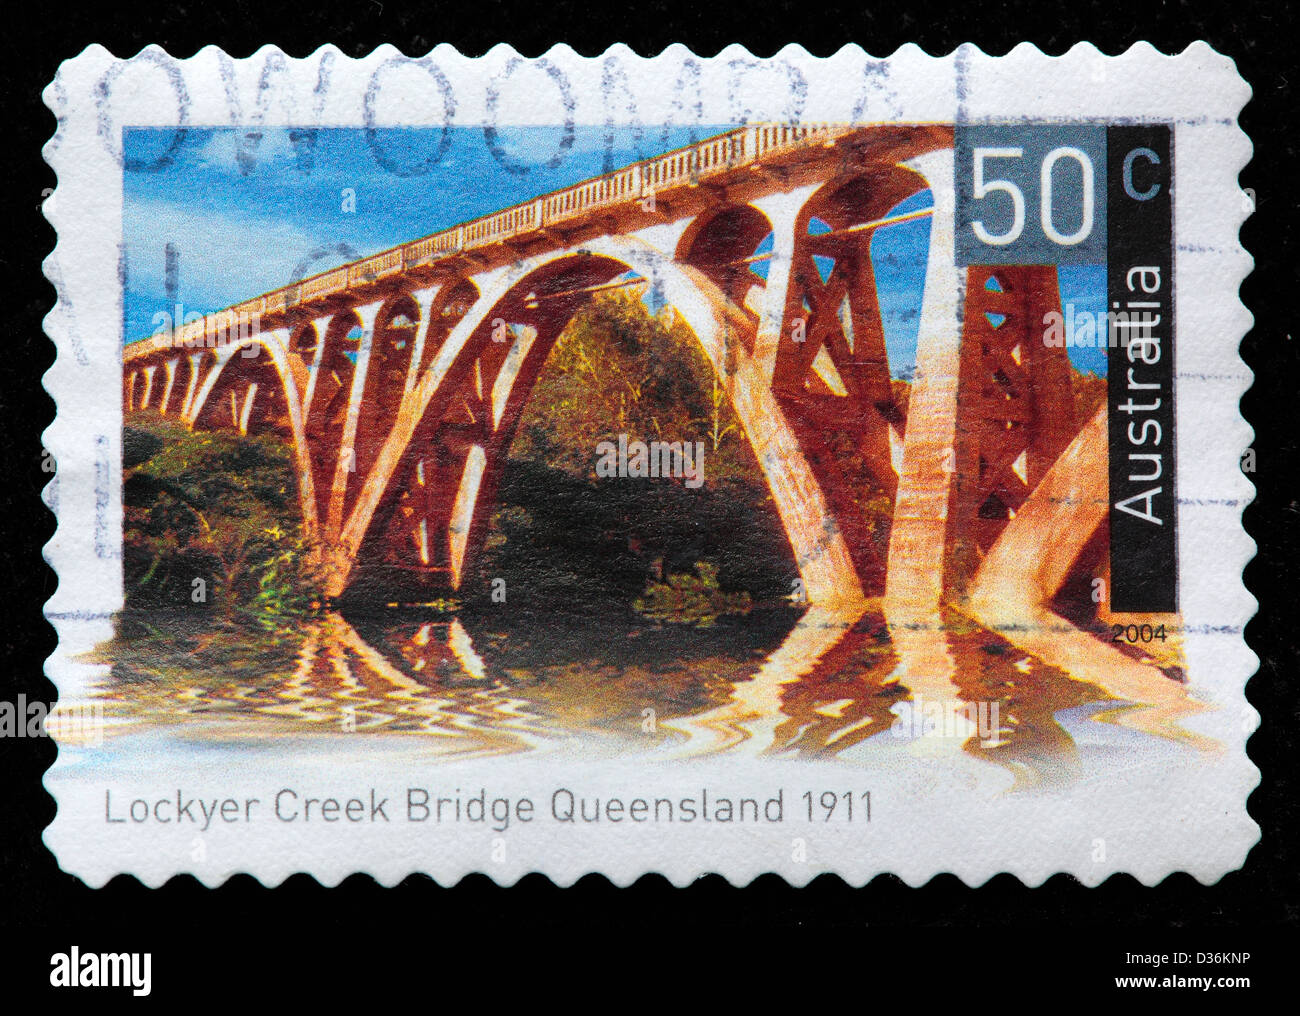 Lockyer Creek Bridge Queensland (1911), Briefmarke, Australien, 2004 Stockfoto